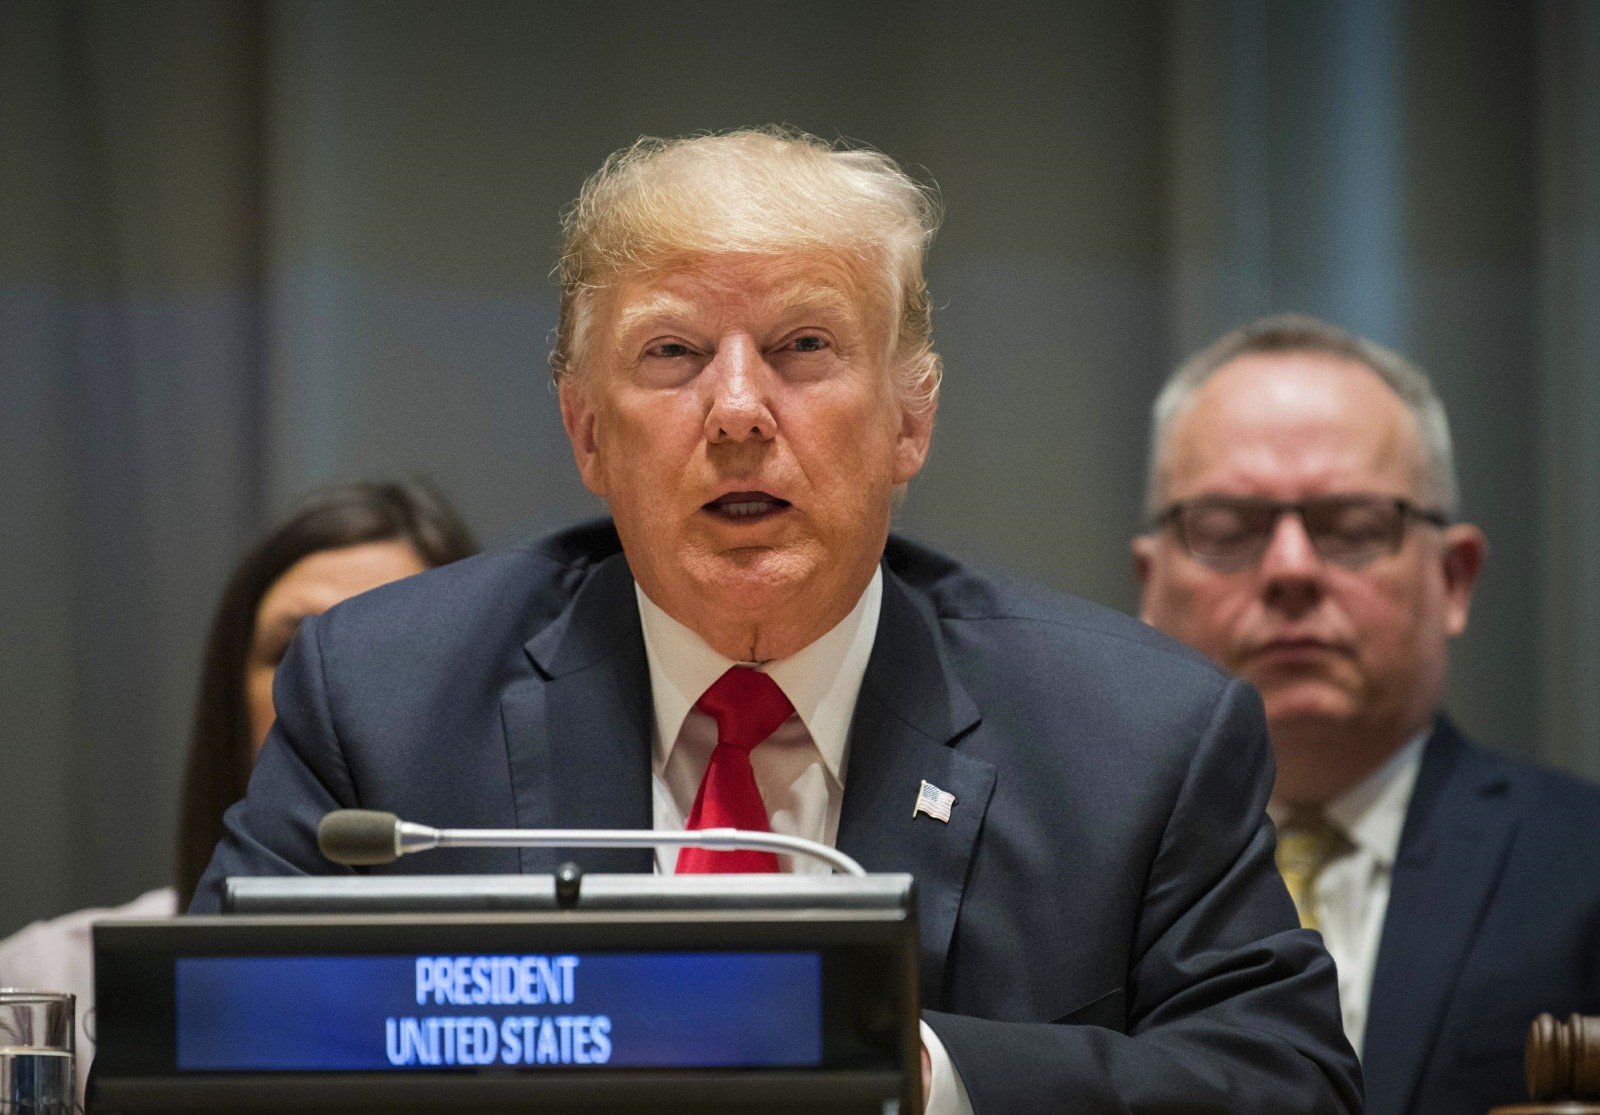 President Trump attends UN meeting on Global Drug Problem